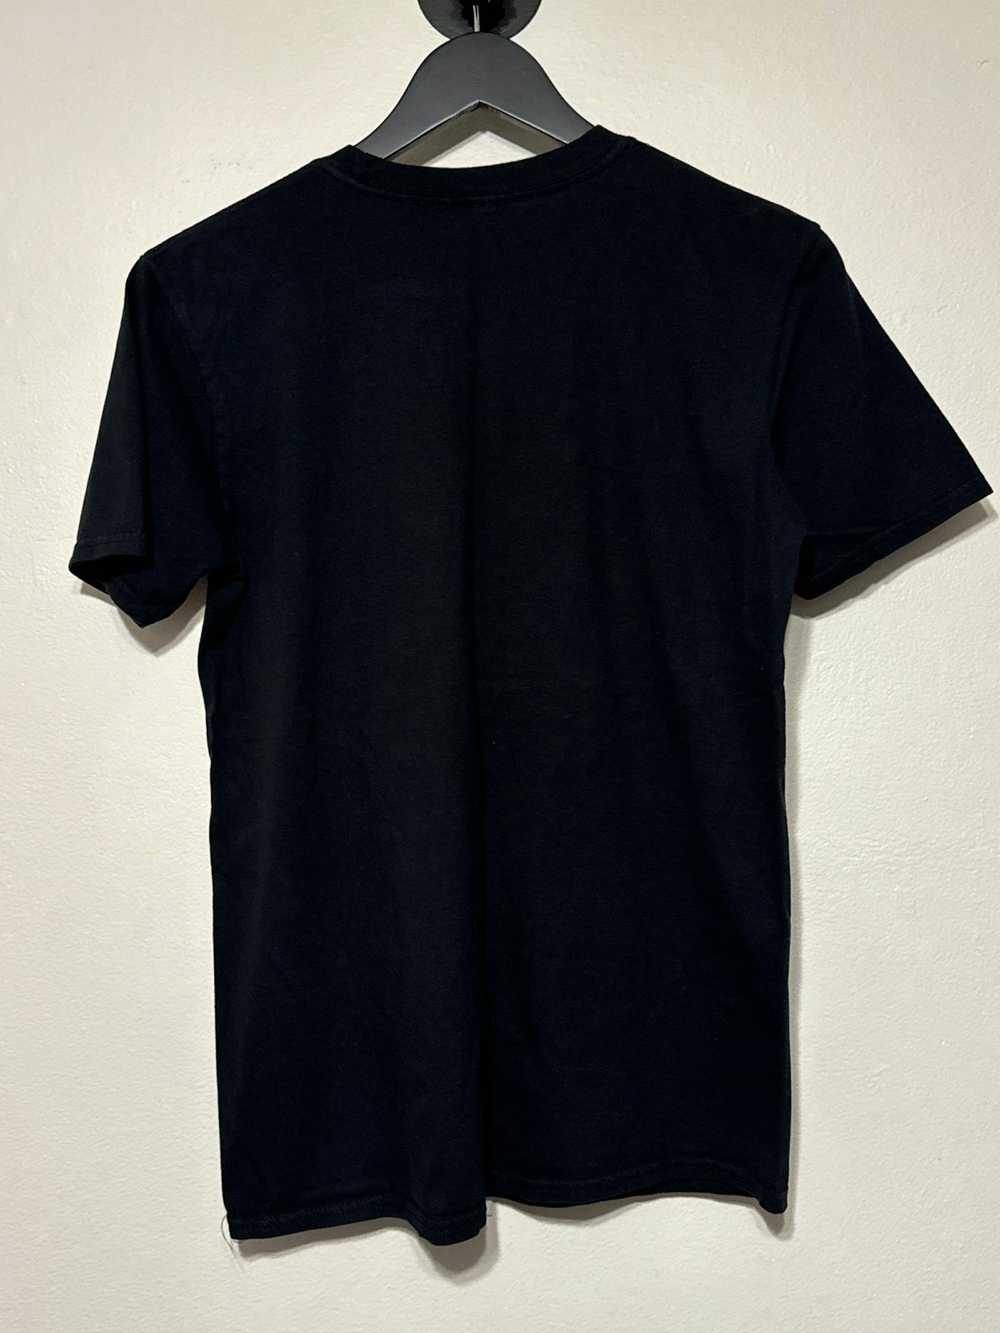 Band Tees Killing Joke Band T Shirt Size M Black - image 3